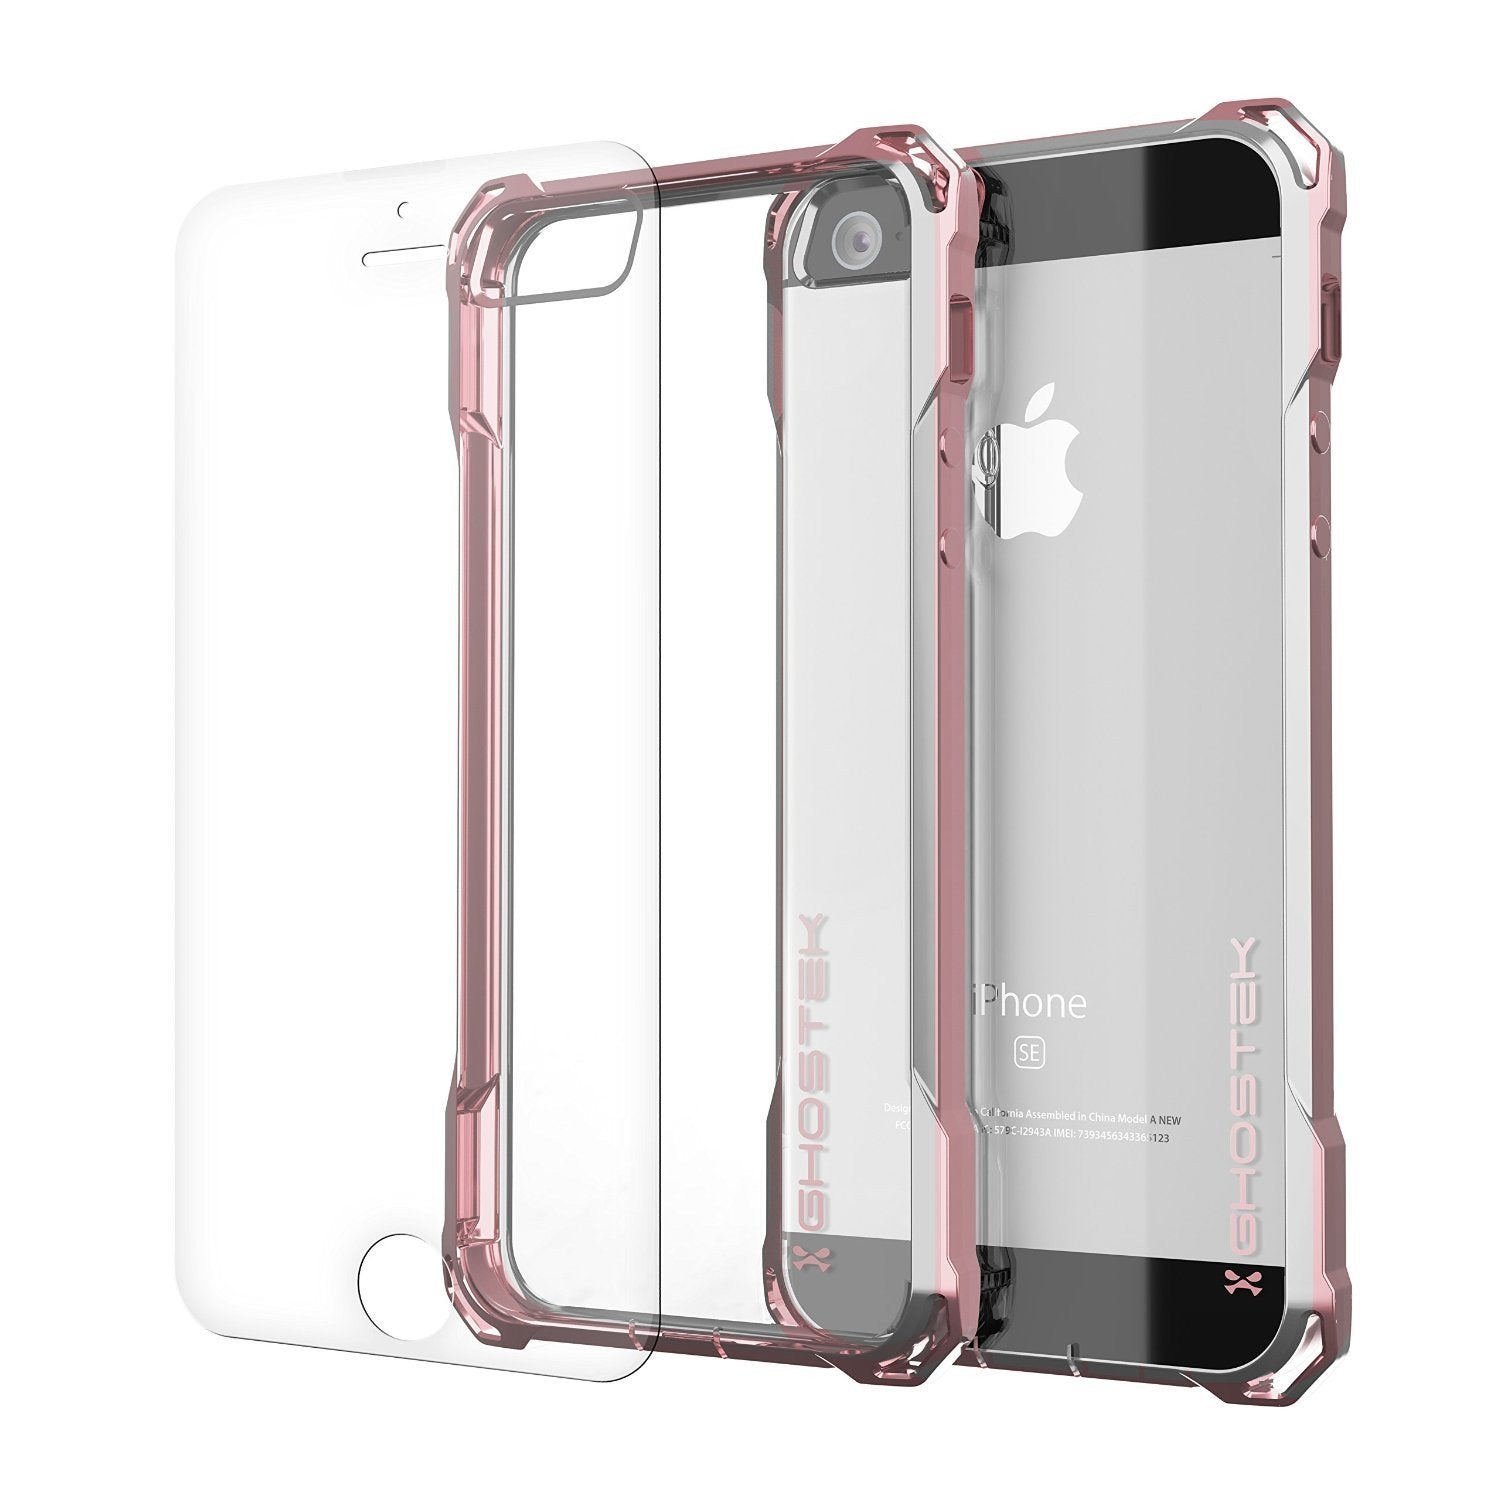 iPhone SE Case, Ghostek® Covert Pink, Premium Impact Protective Armor | Lifetime Warranty Exchange